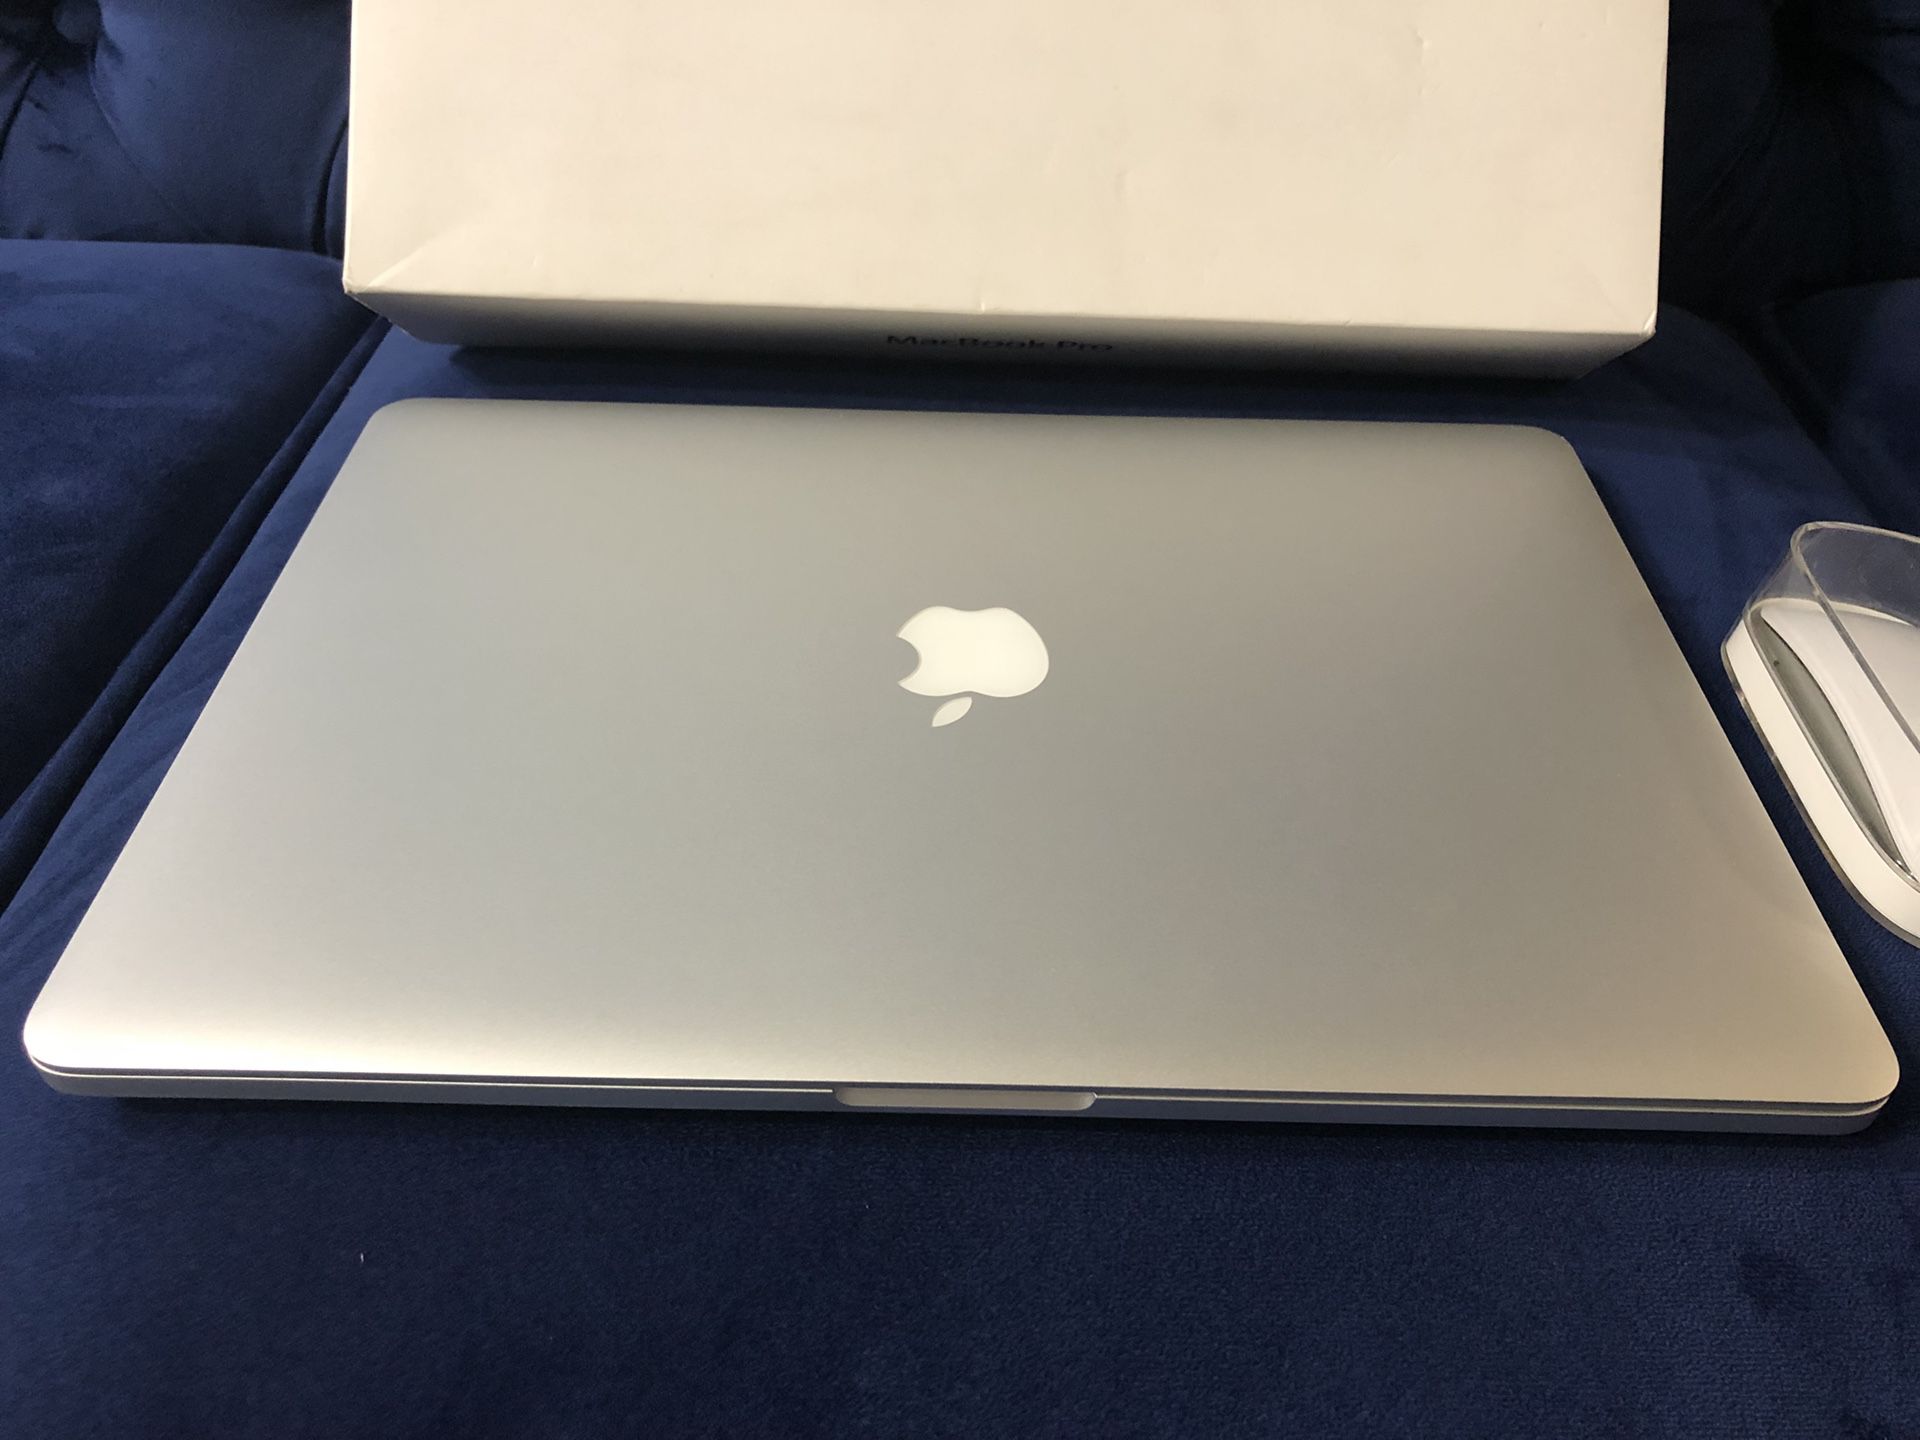 MacBook Pro 15-inch, 2.7 GHz, 16 GB DDR3/ 512 GB Flash Storage, with Apple Mac wireless